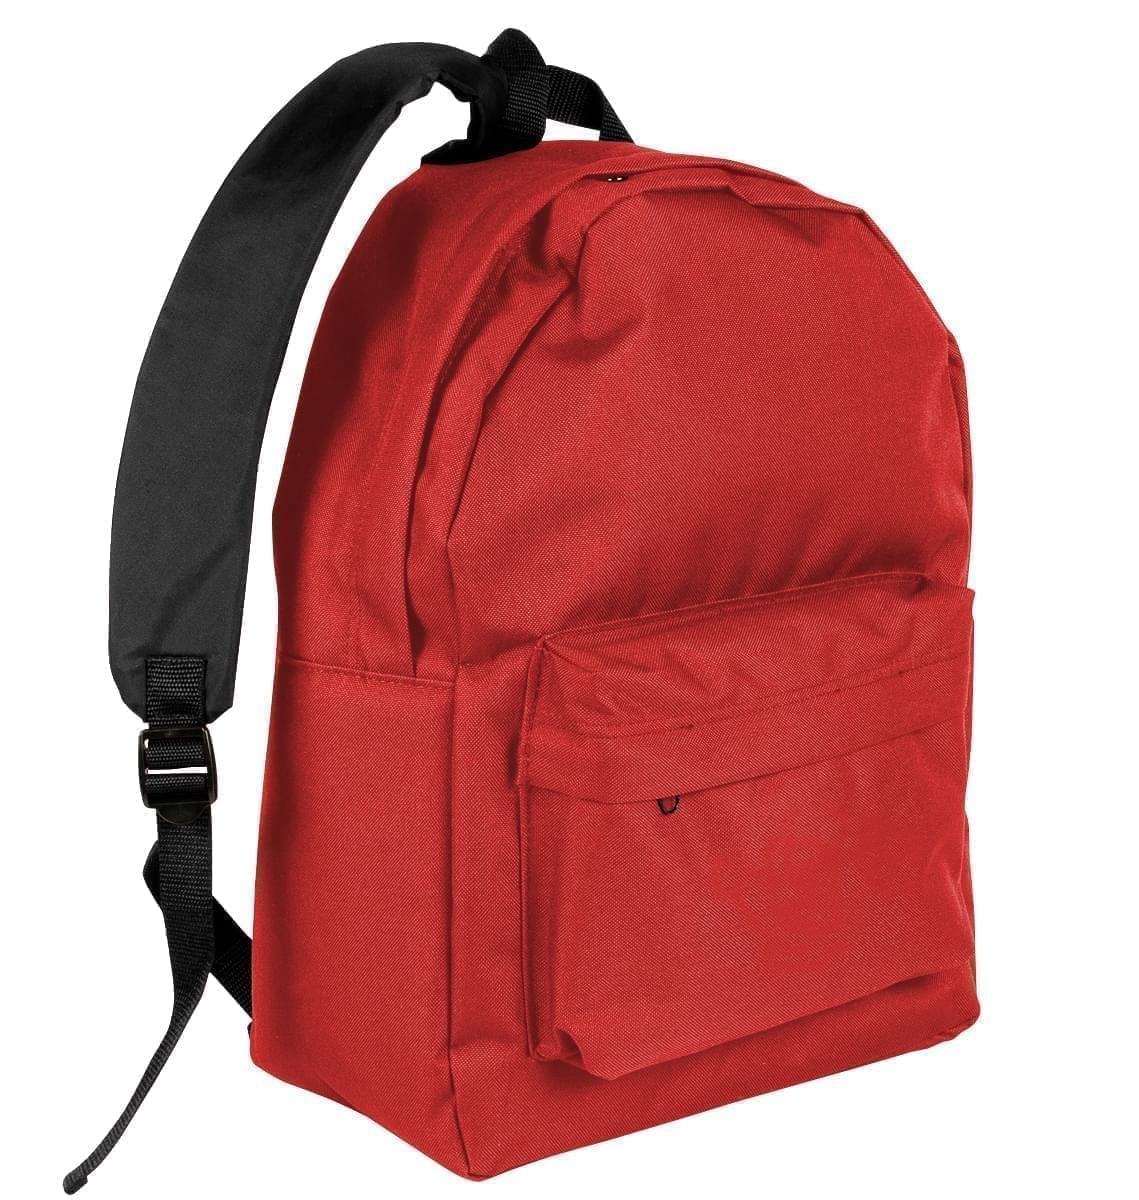 USA Made Nylon Poly Backpack Knapsacks, 8960-600